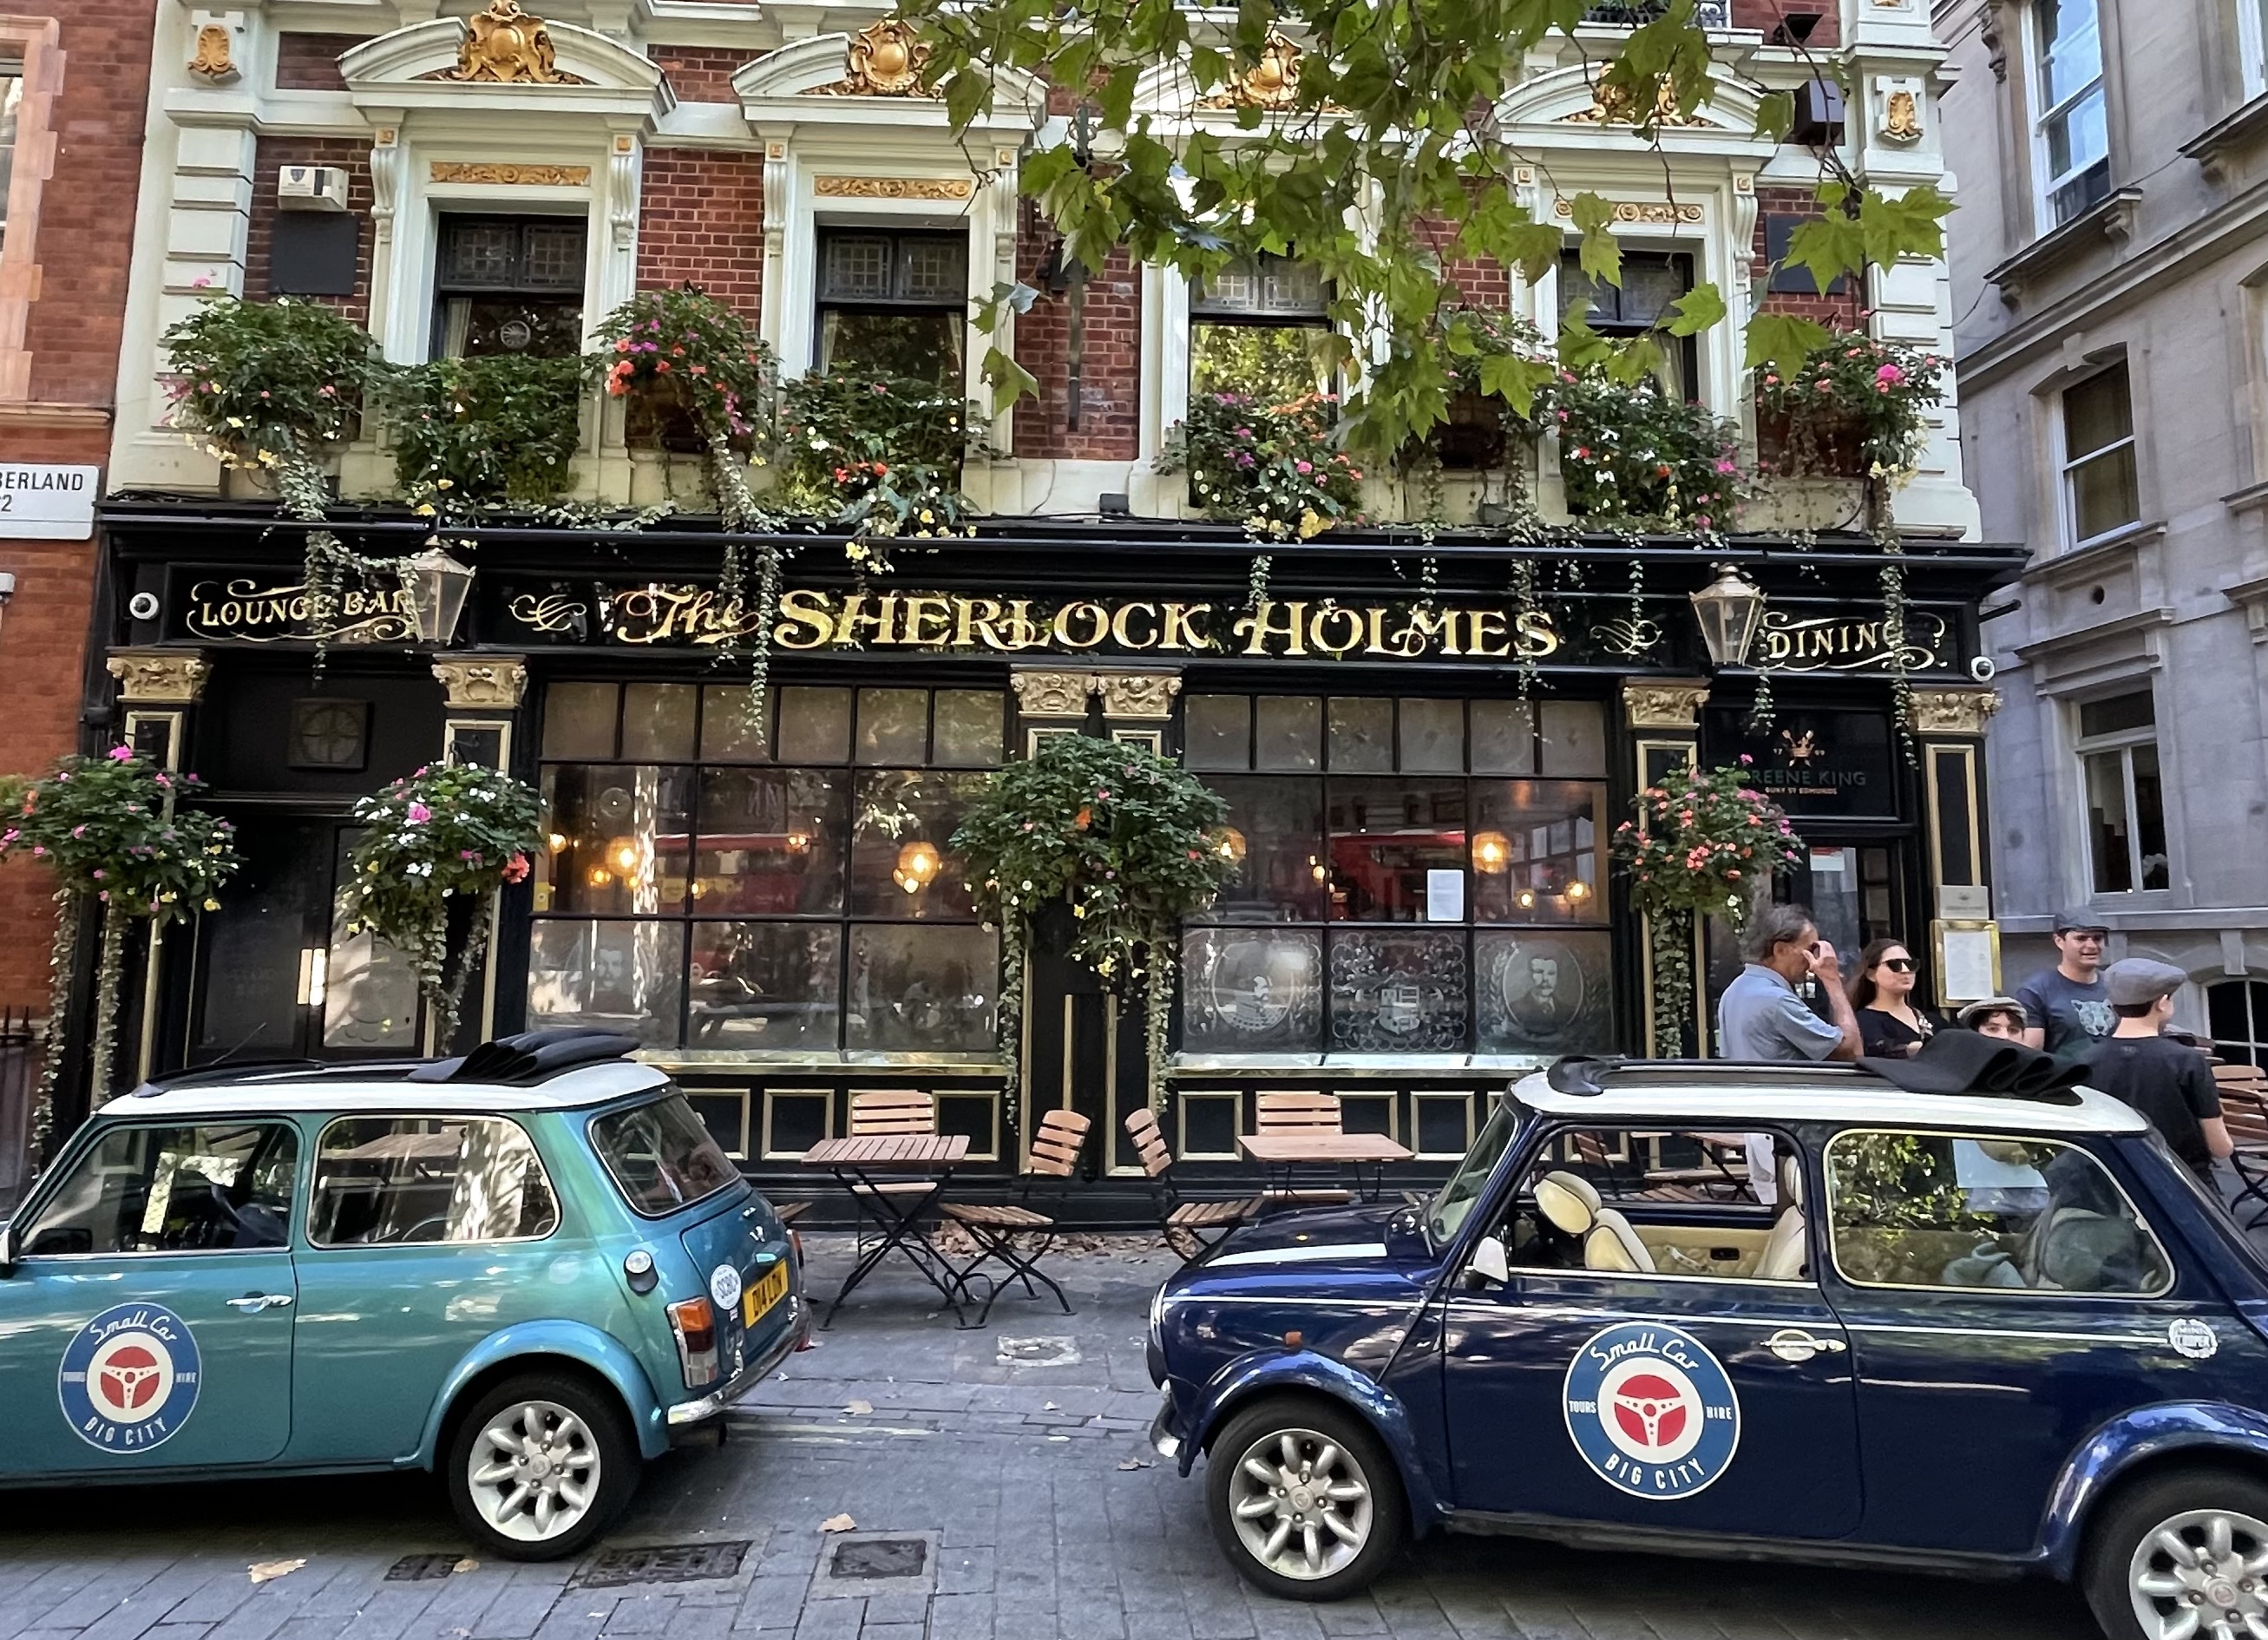 Sherlock Pub